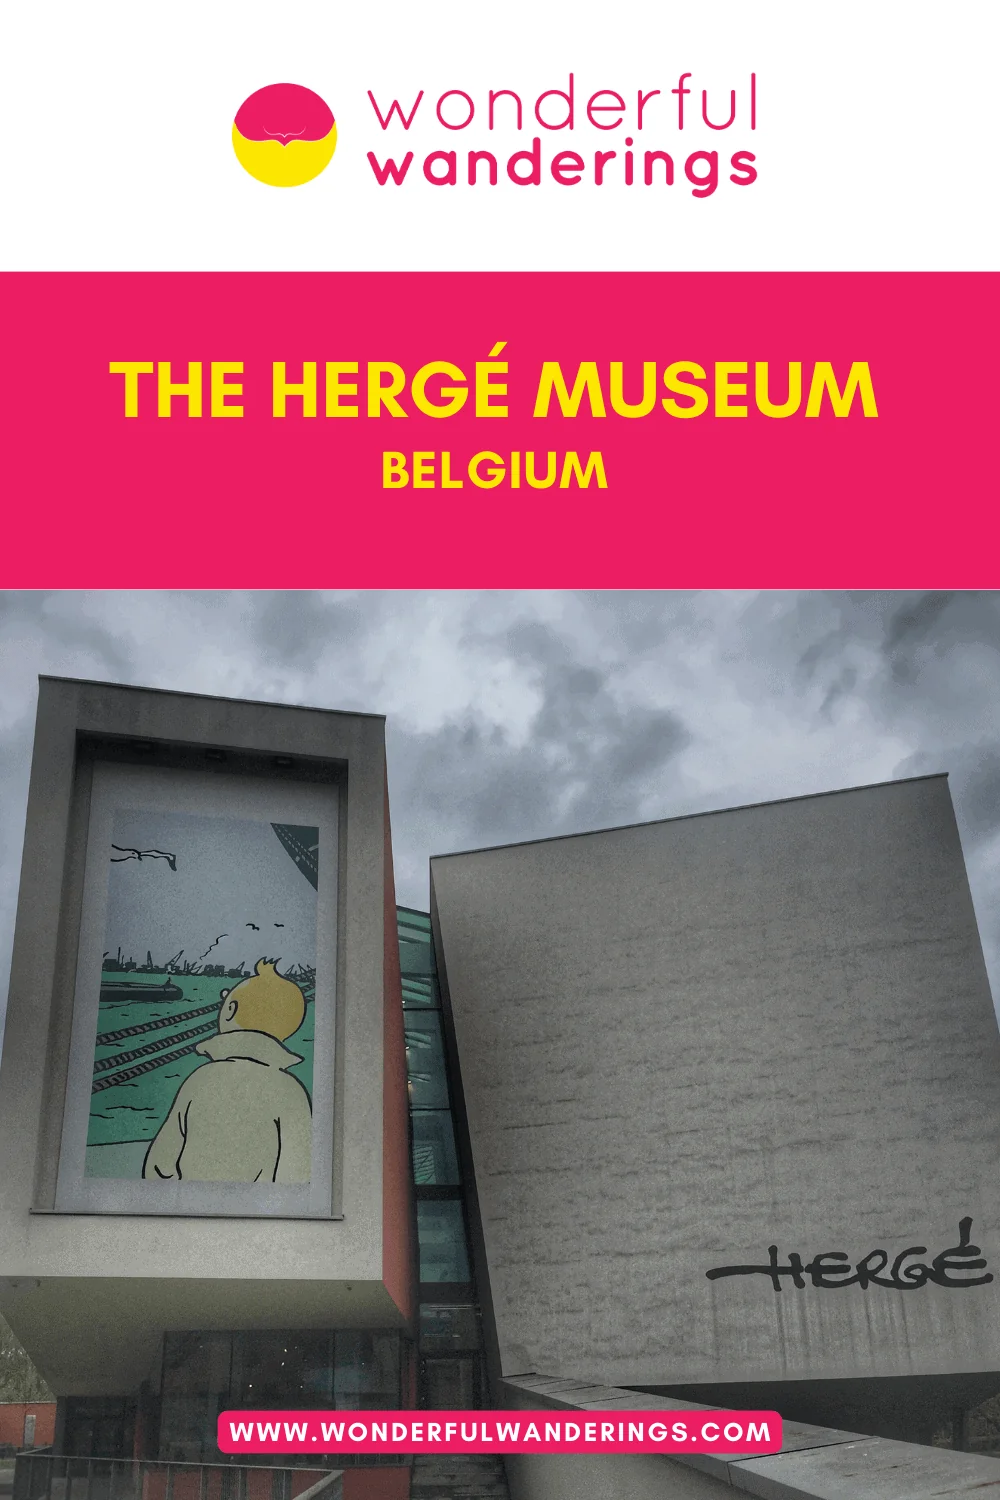 The Hergé Museum Pinterest image